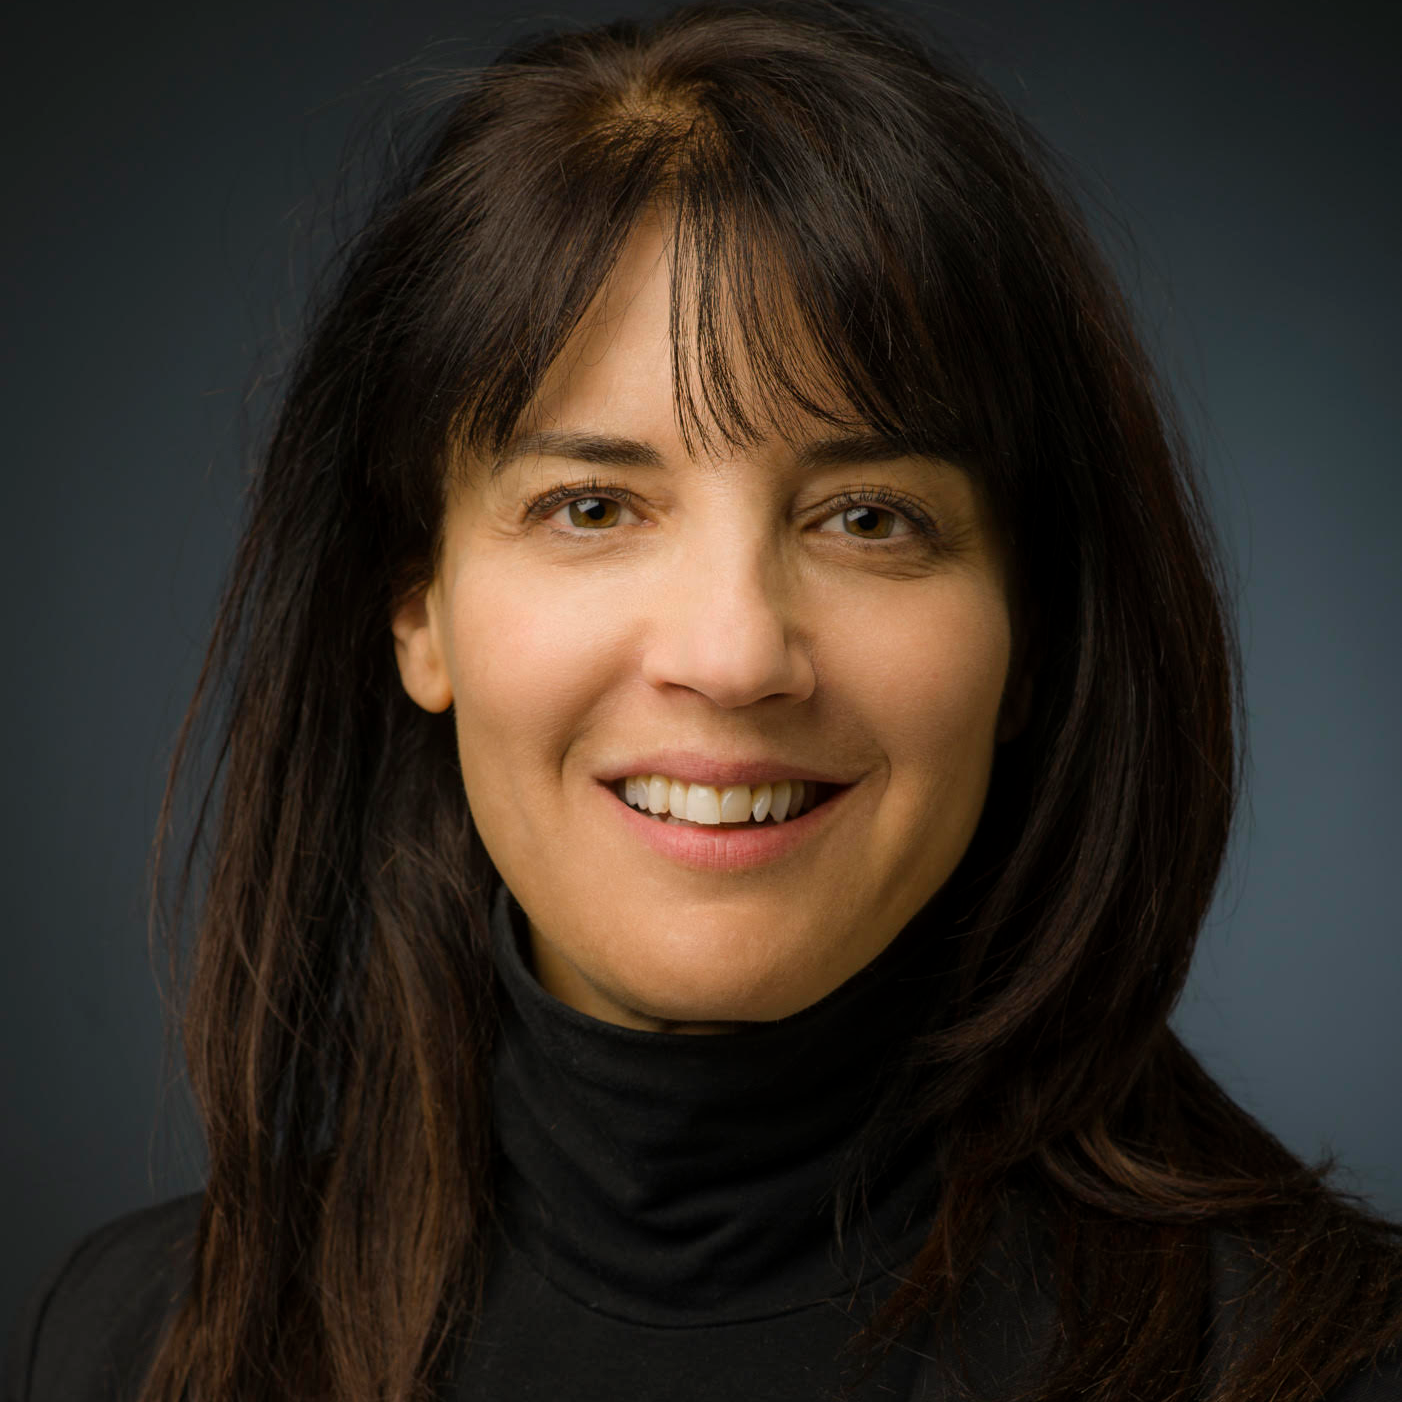 Dr. Eileen Rakovitch